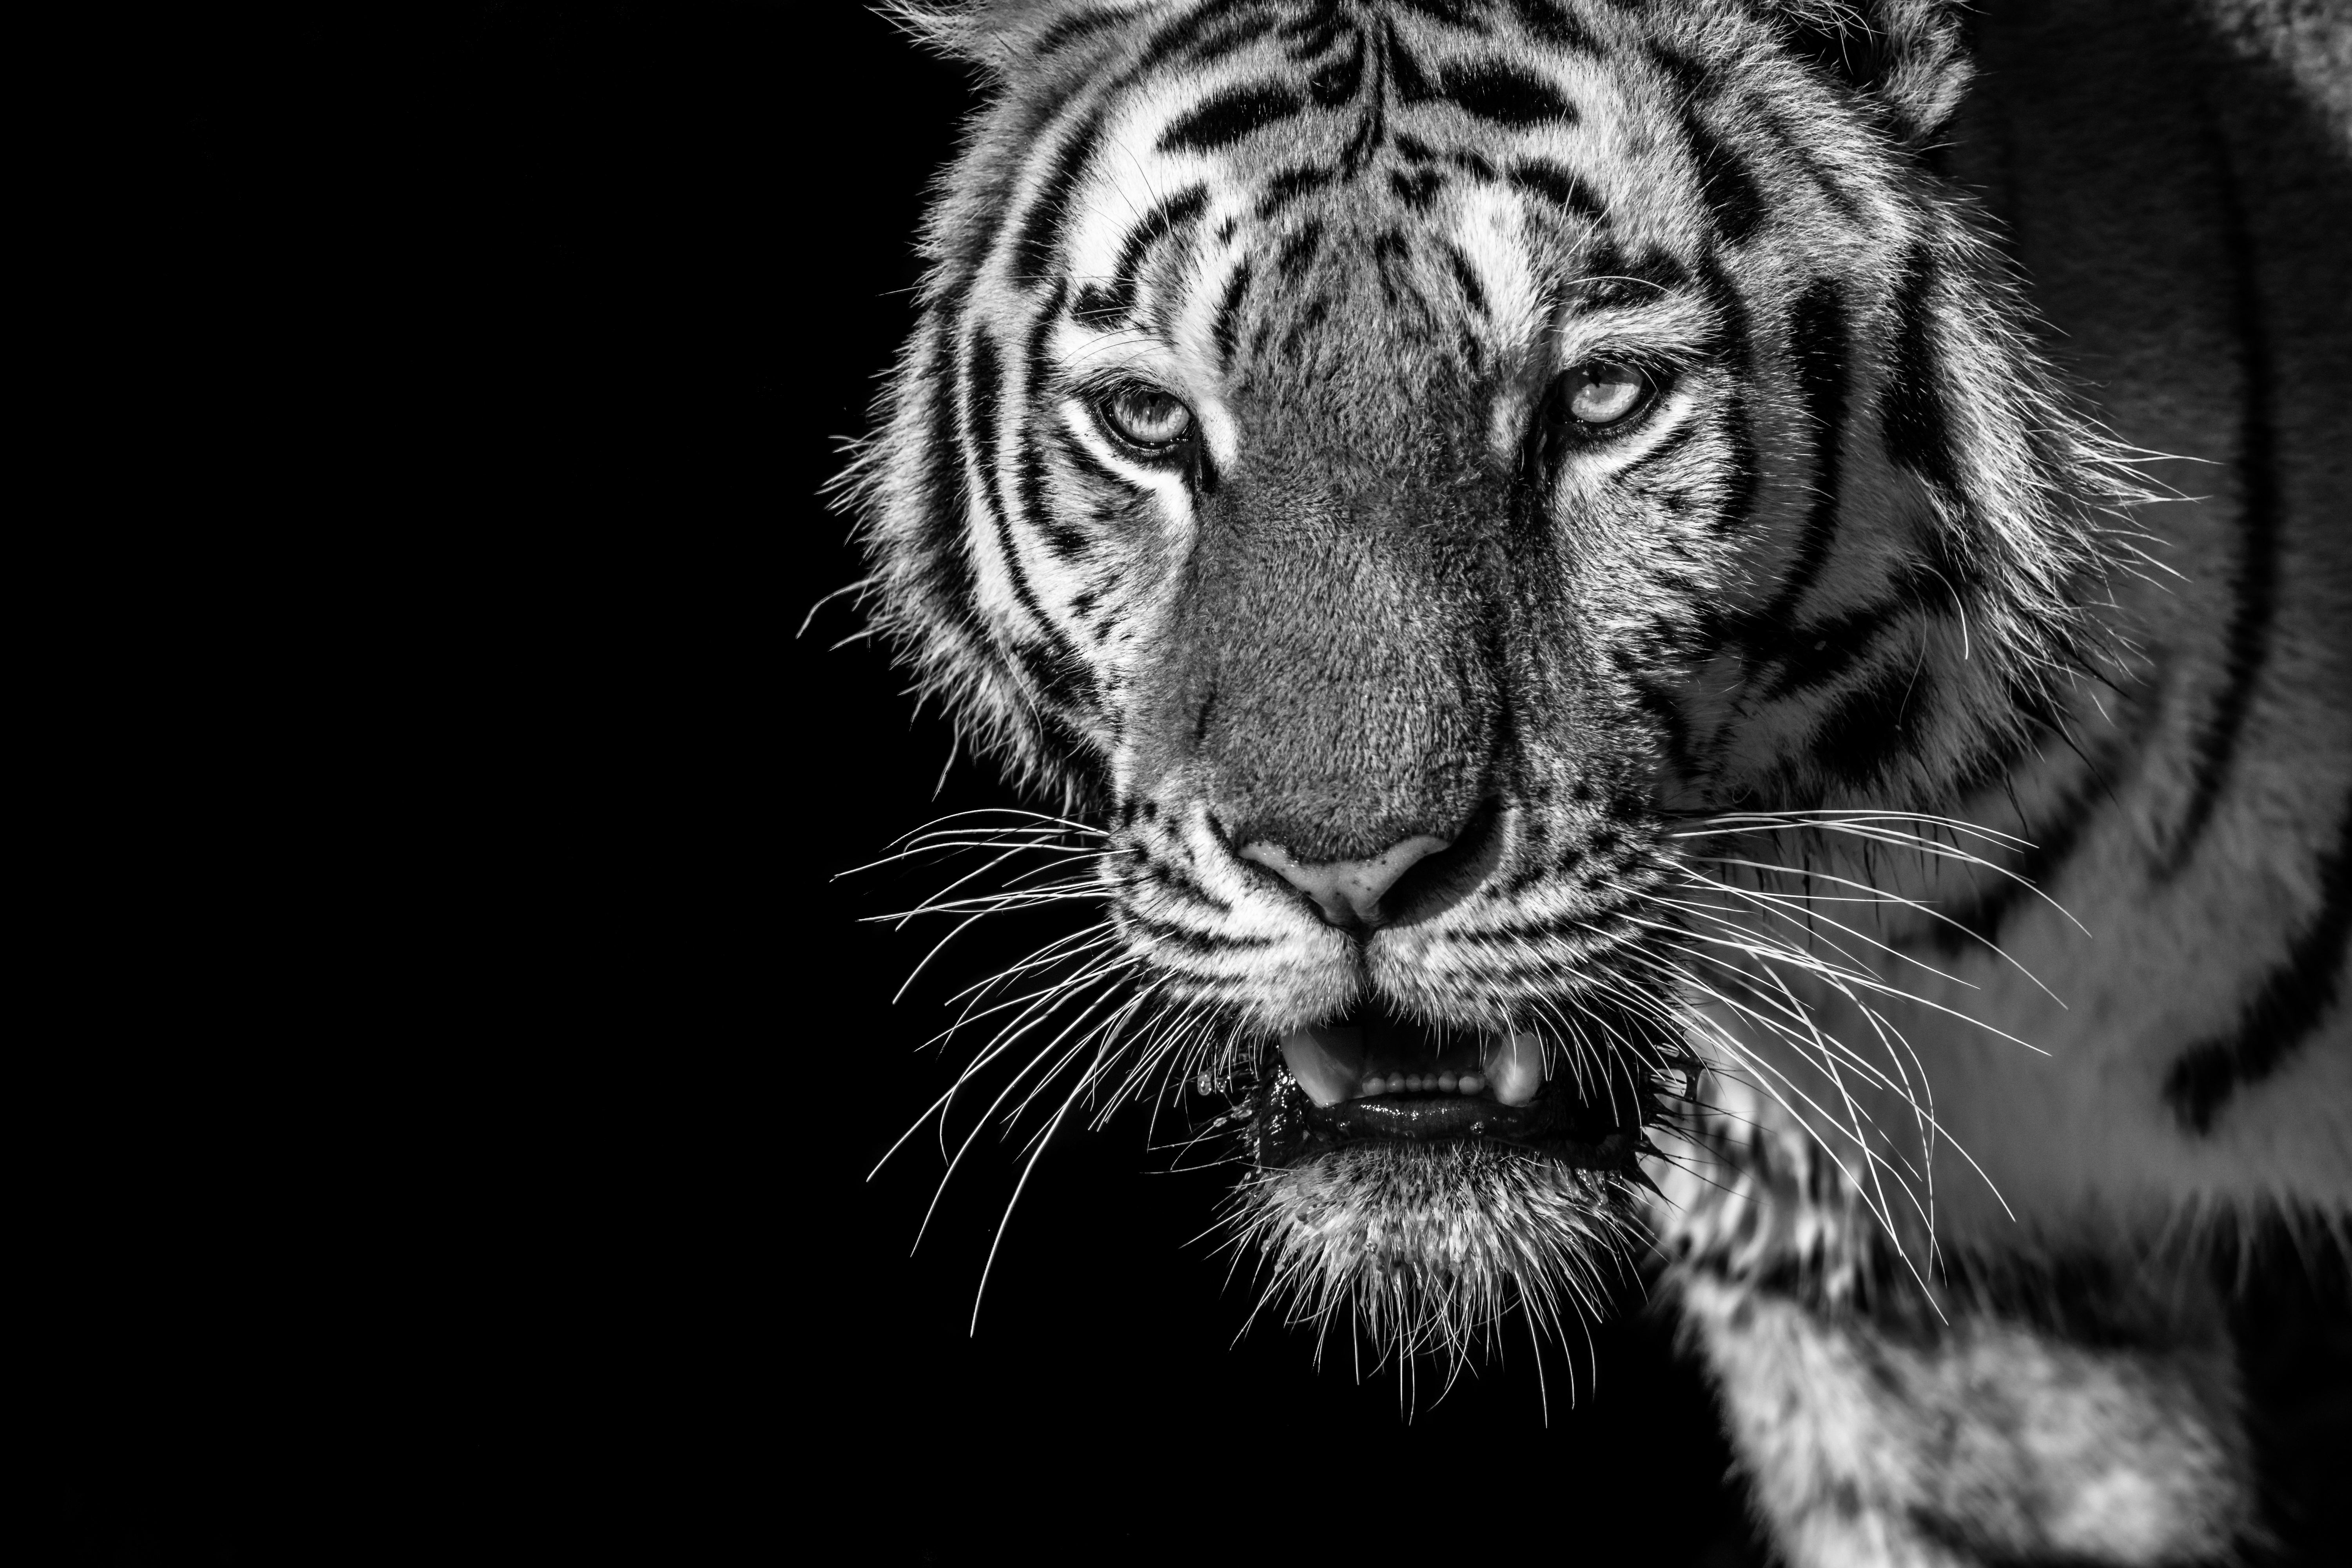 animals, striped, predator, bw, chb, tiger, wild, looks